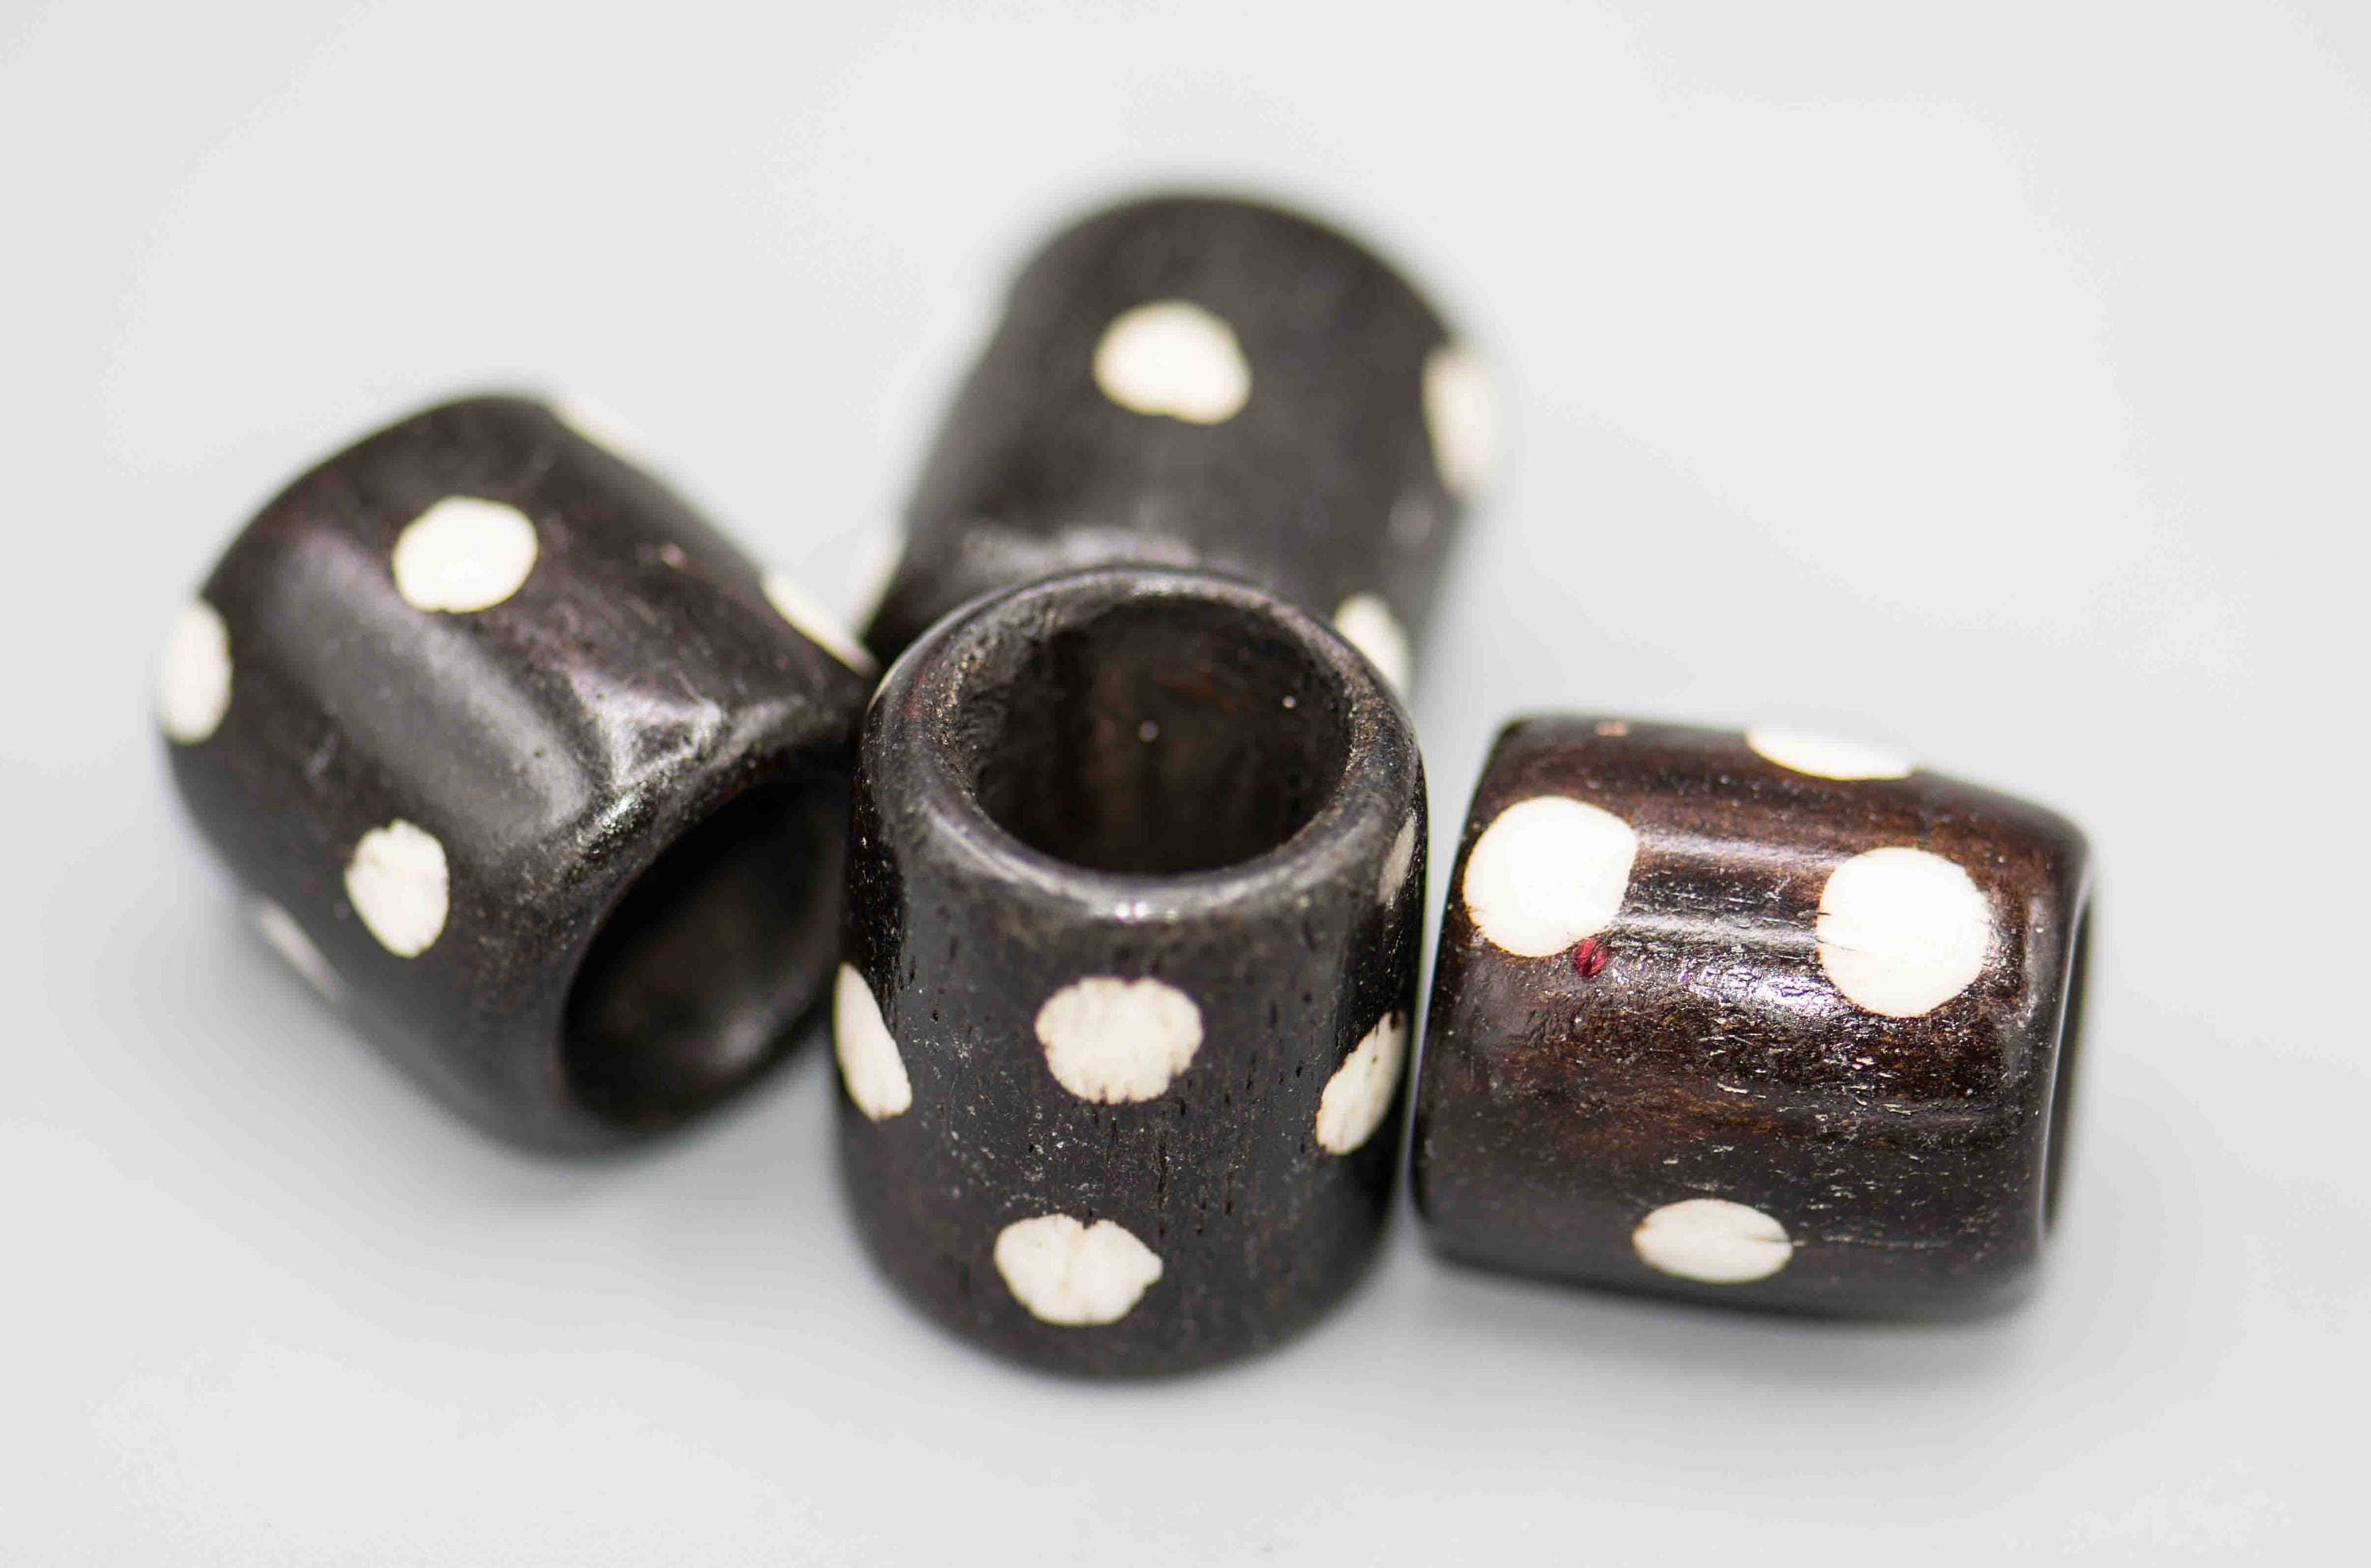 Rustic Bone Beads. African 2mm Hole Bone Beads. AB-9 